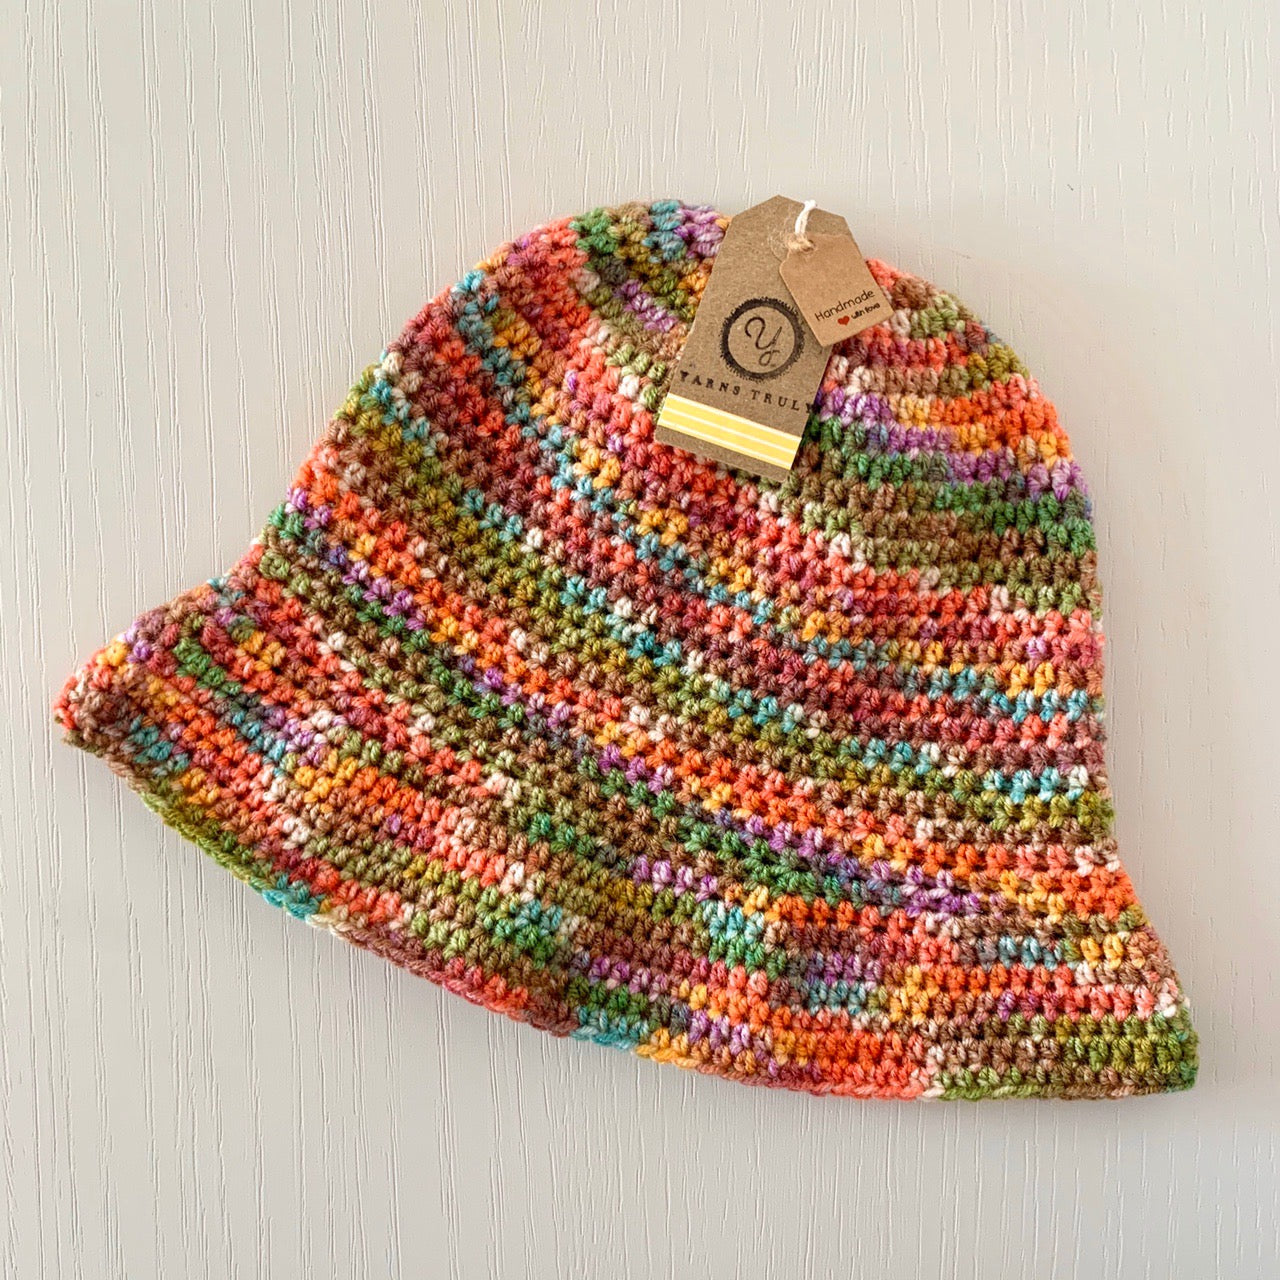 Handmade crochet bucket hat in Burnt Rainbow shades